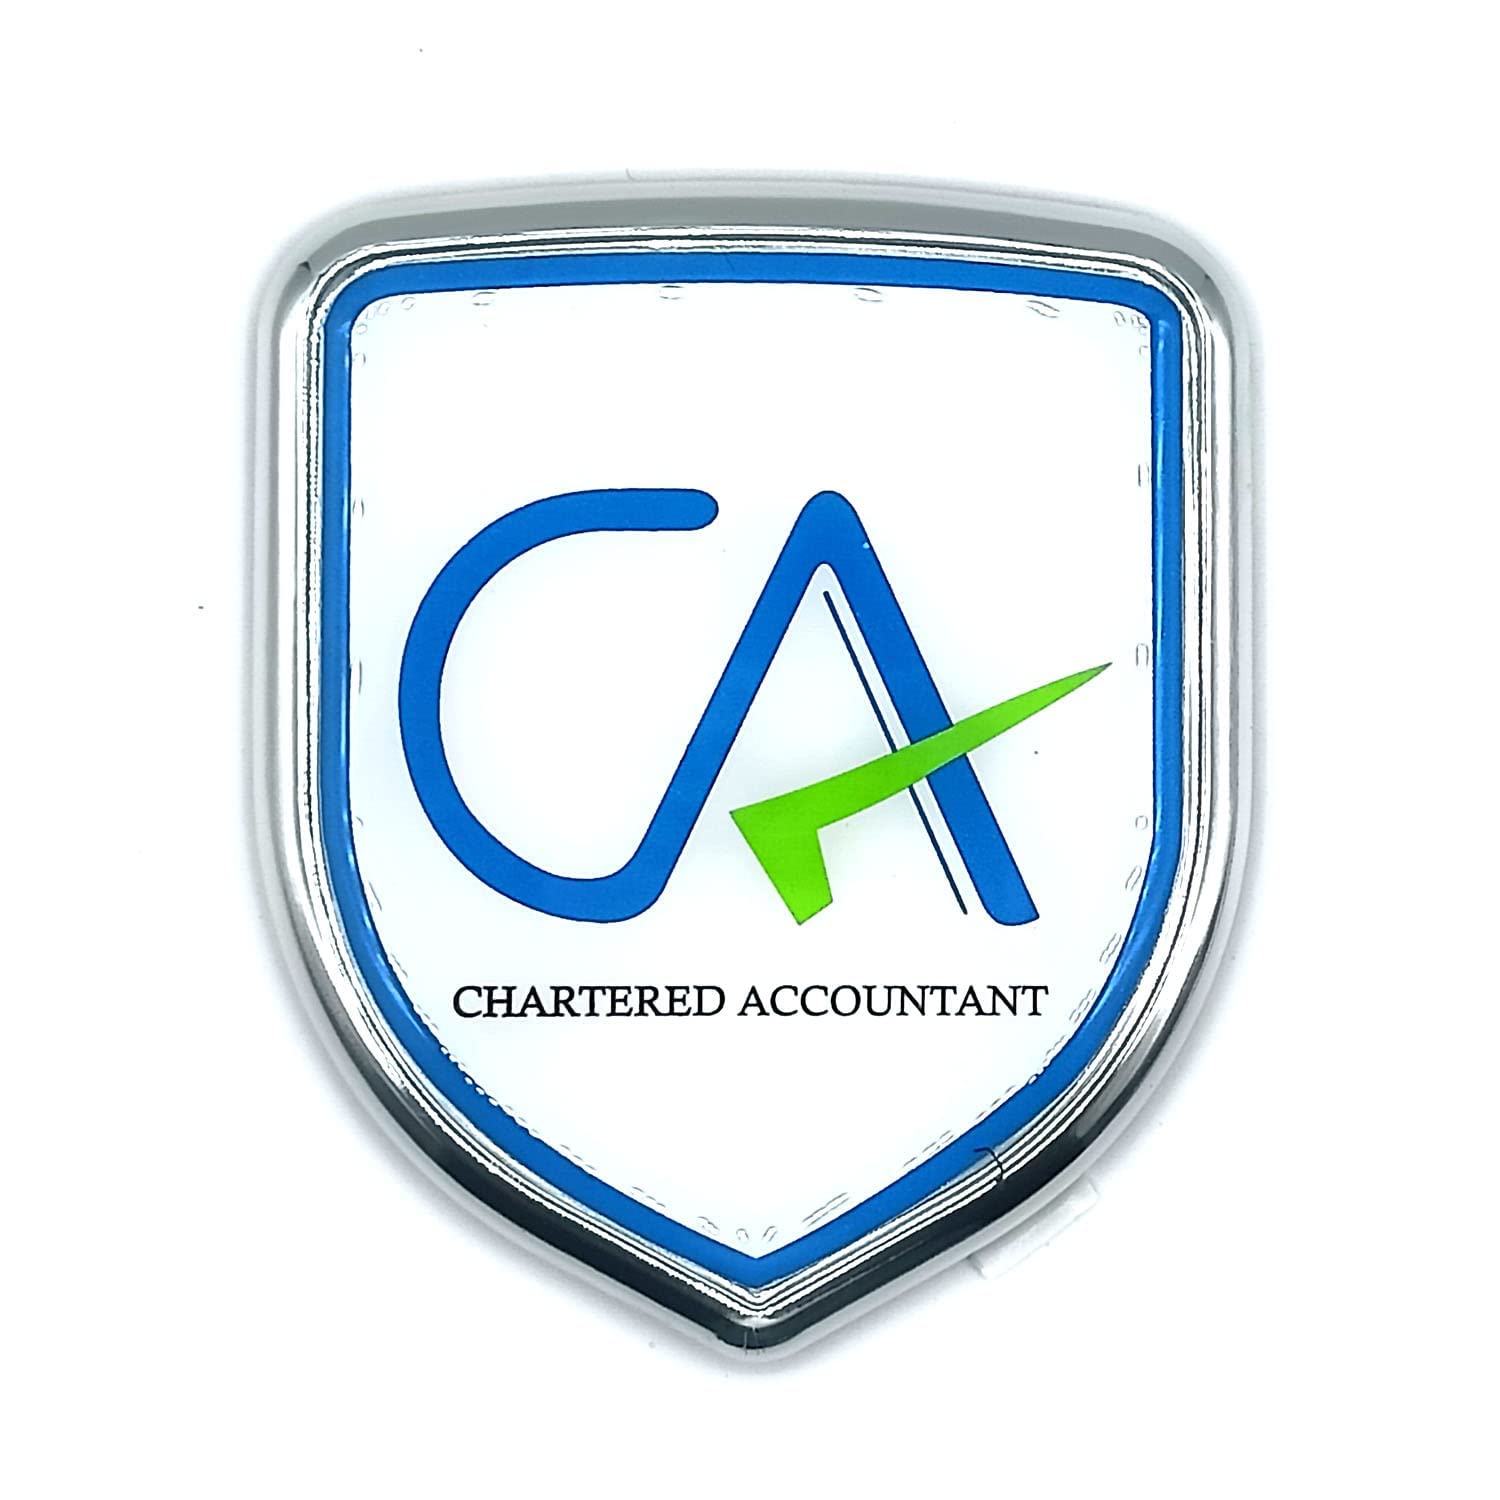 S2S Chartered Accountant 3D Chrome Sticker Emblem Badge Logo For Cars & Bikes-Stumbit Bikes and Cars